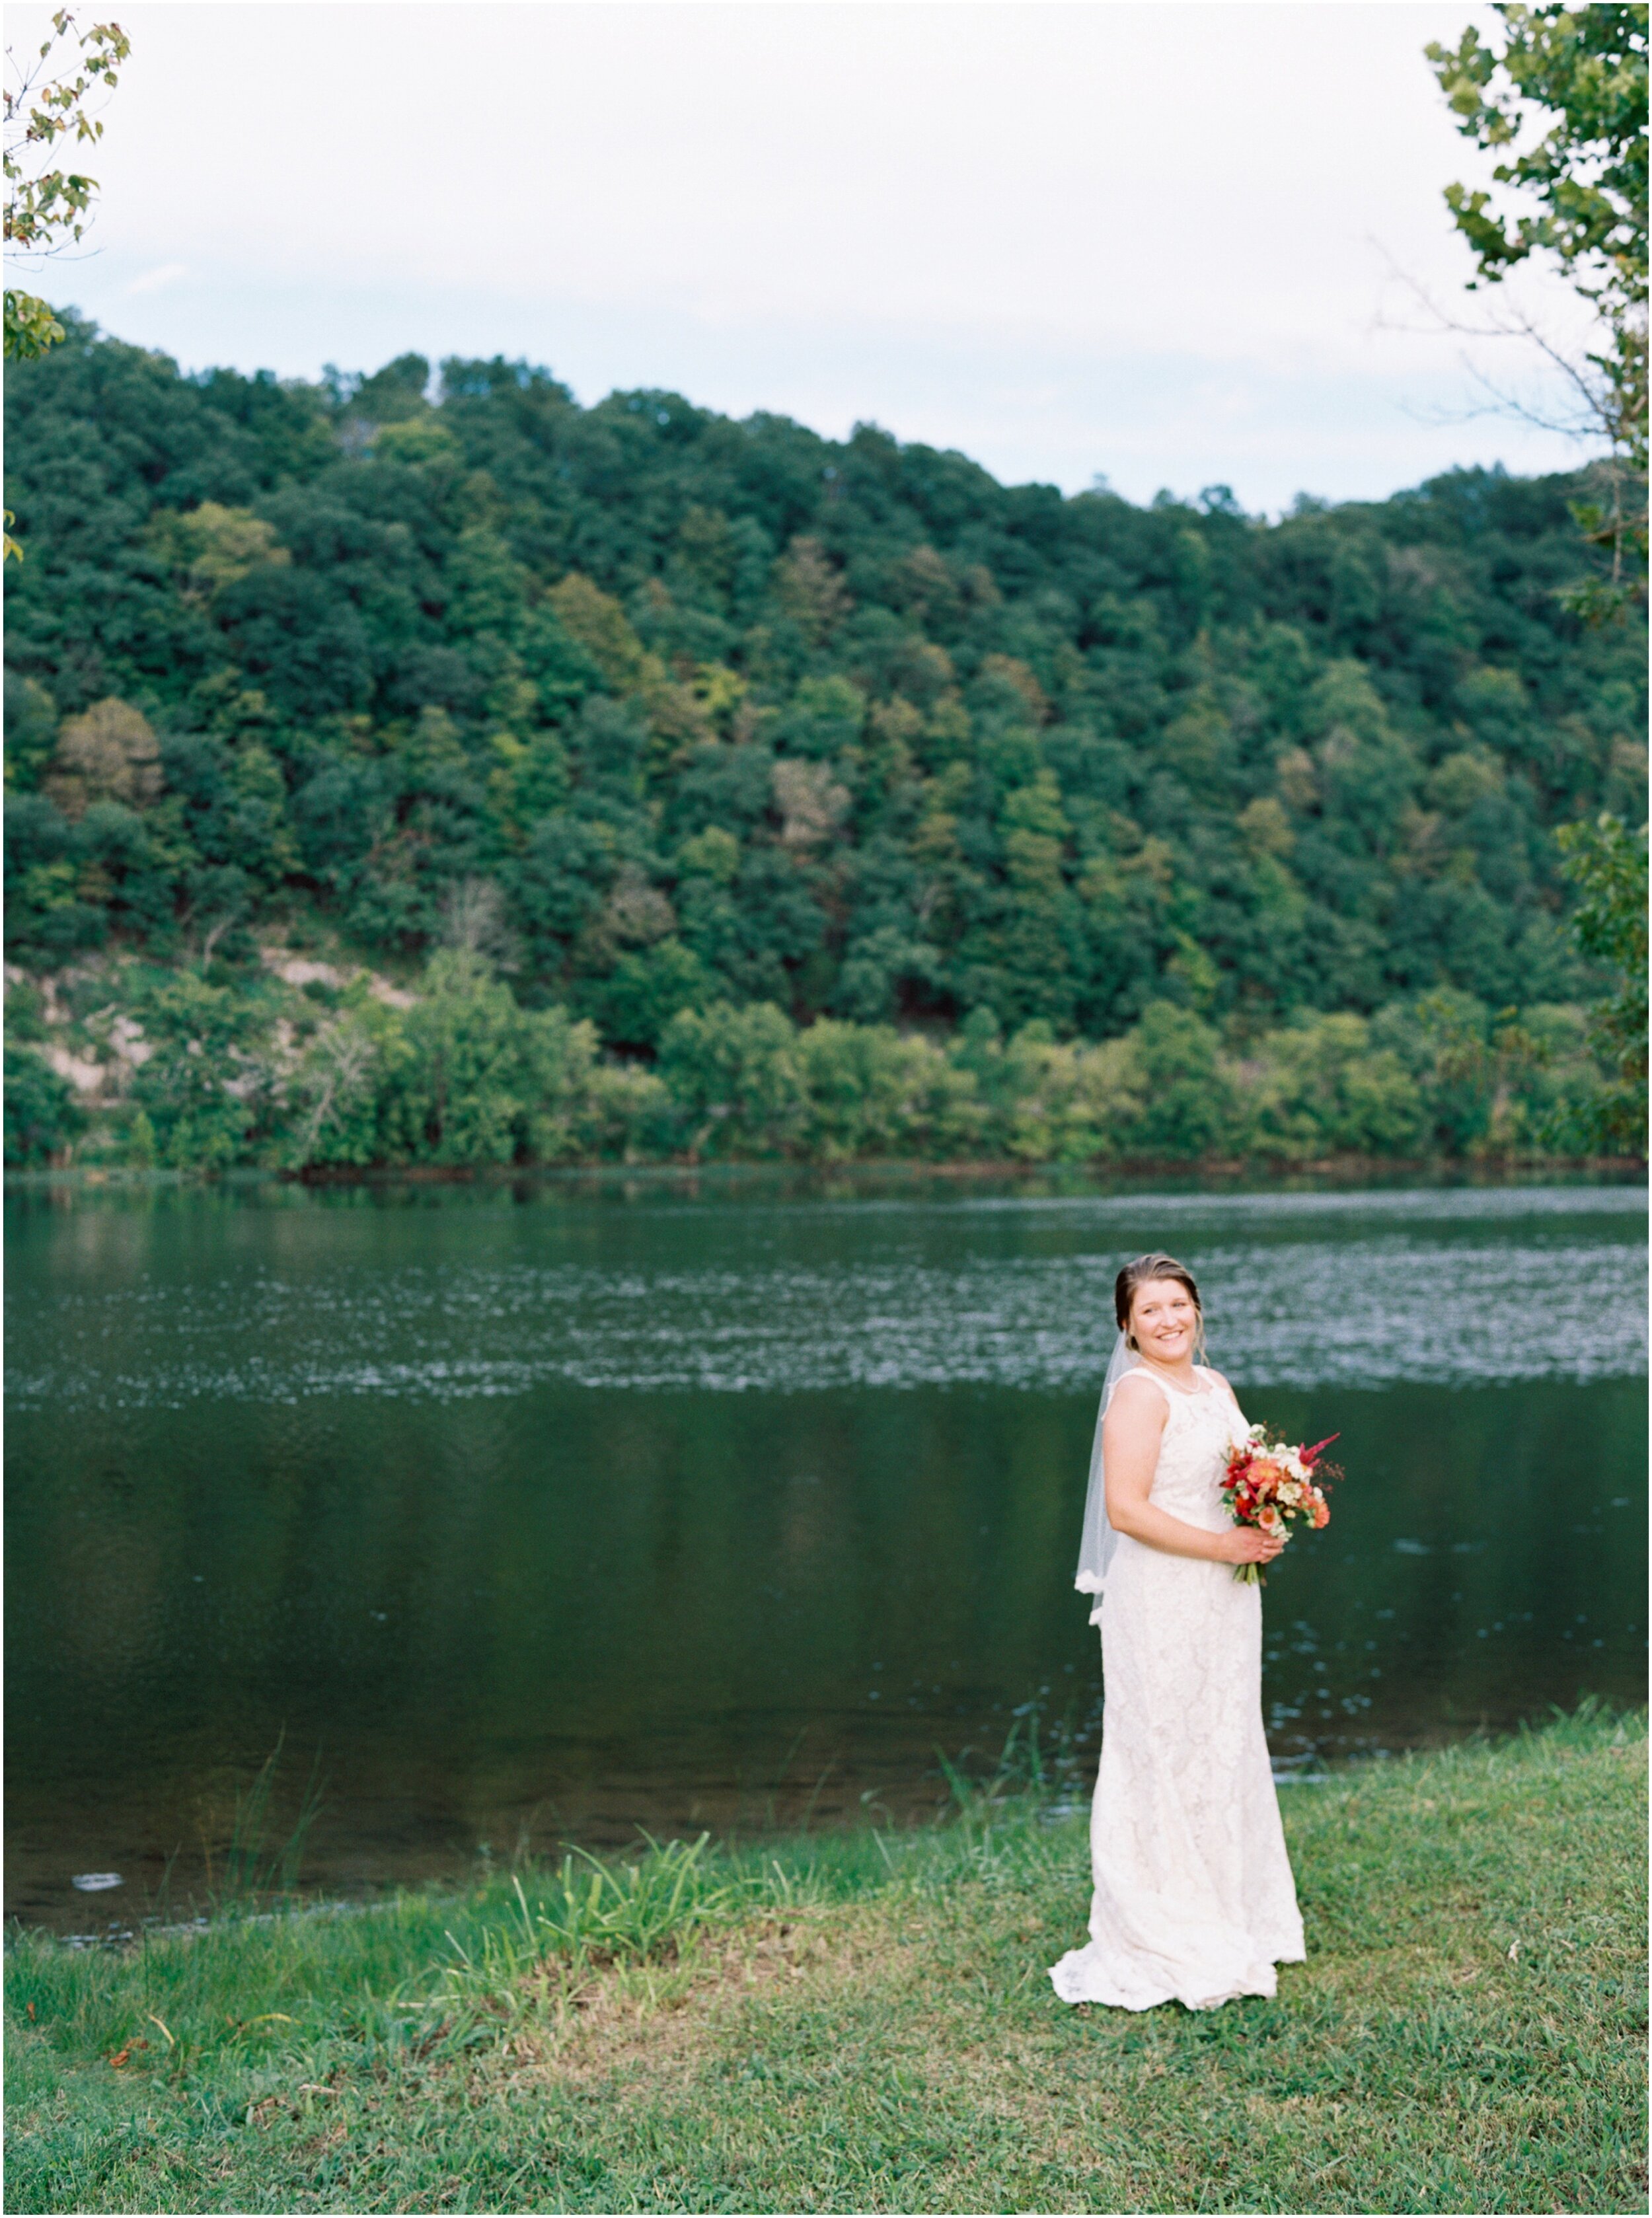 Hannah-Virginia-Rustic-Elegant-River-Bridal-Portraits_0014.jpg